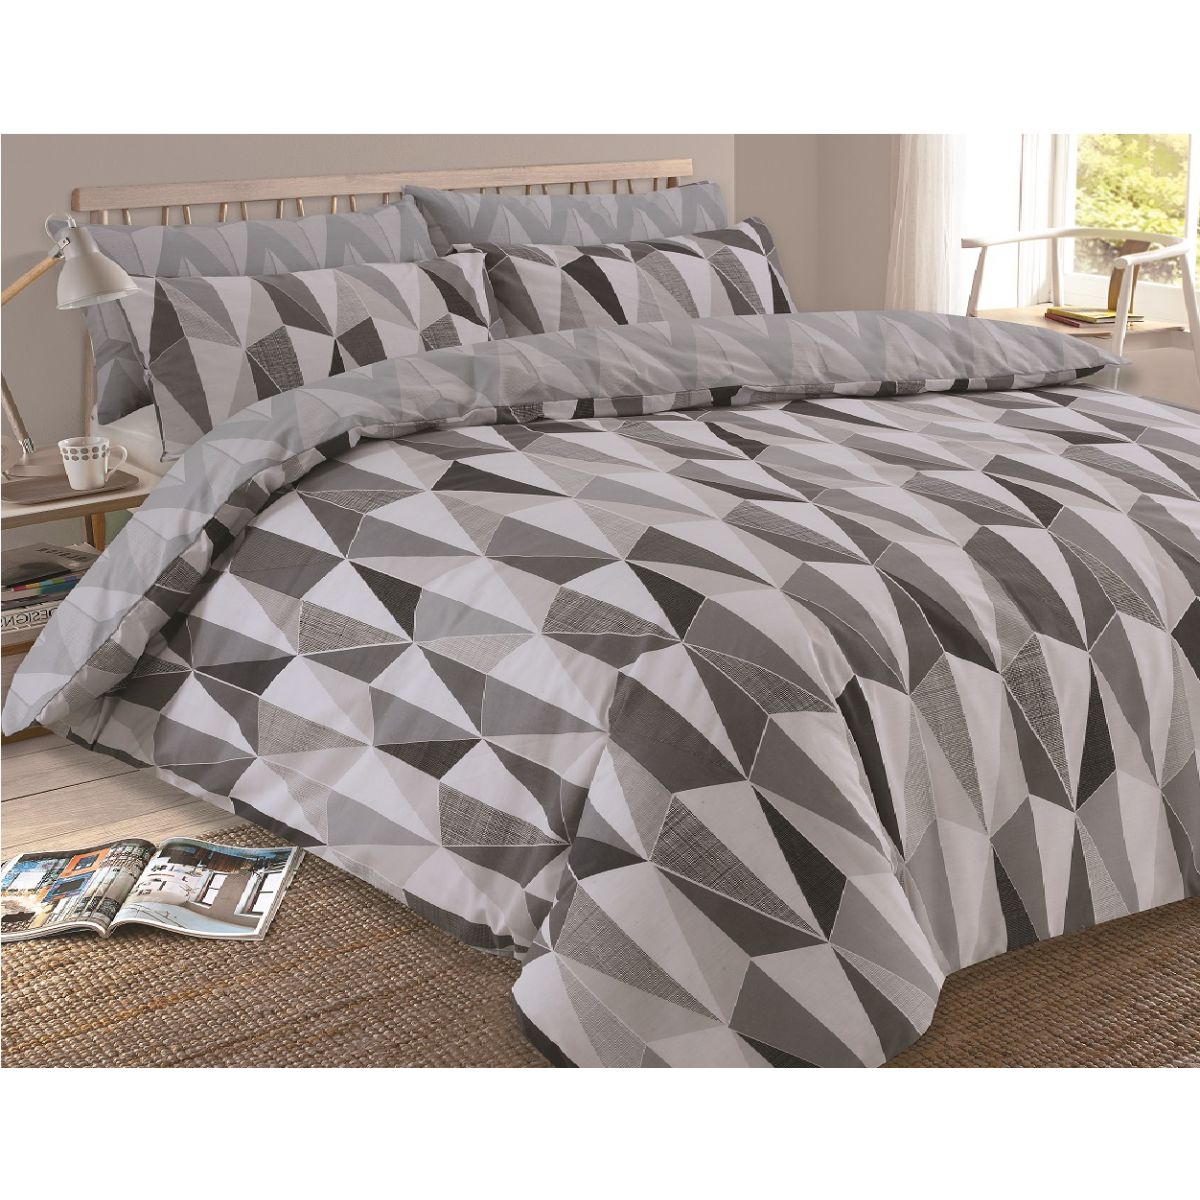 Dreamscene Billie Duvet Cover with Pillowcase Reversible Geometric Triangle Bedding Set, Black Grey Silver - Double